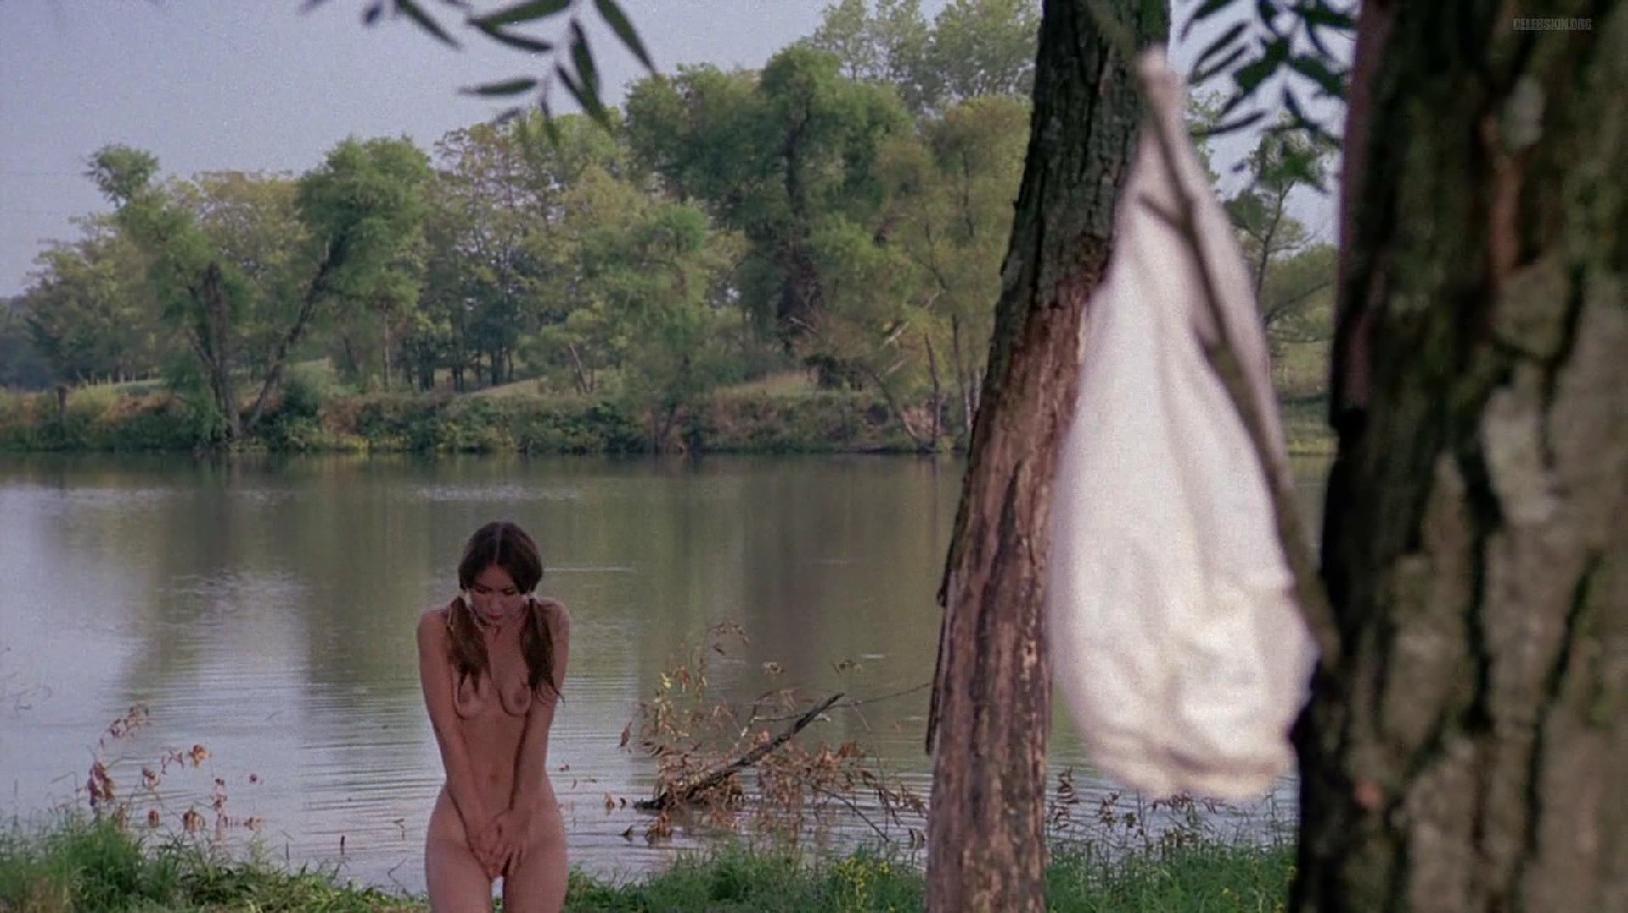 Monica Gayle nude - Nashville Girl (1976)